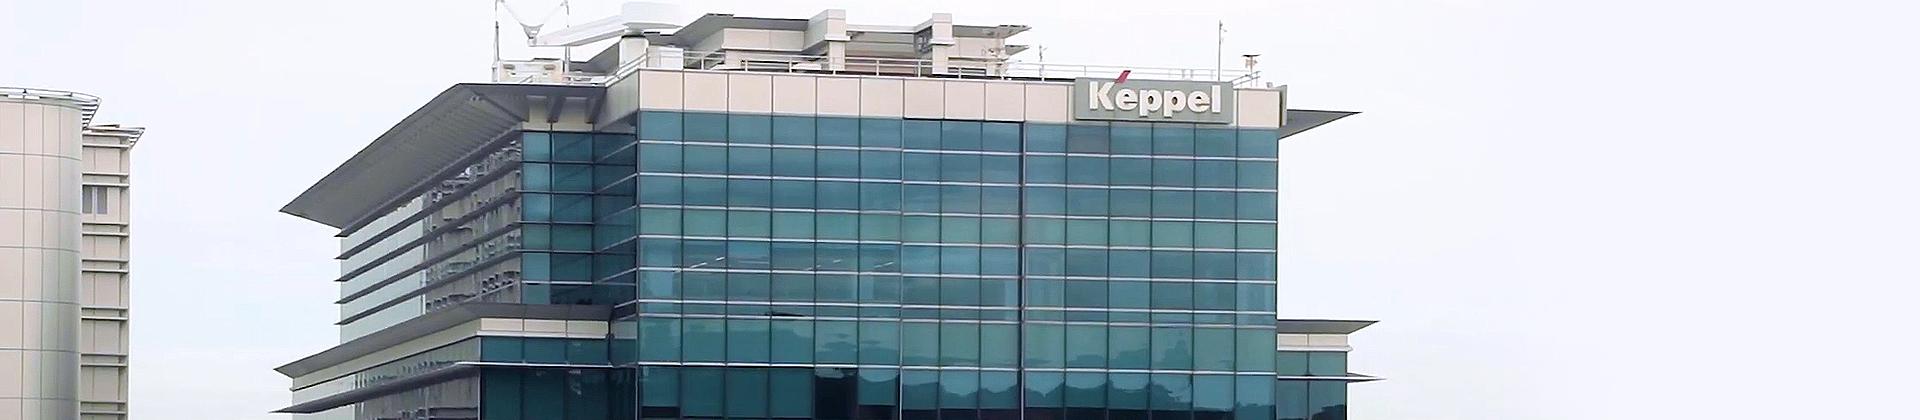 Keppel Bay Tower